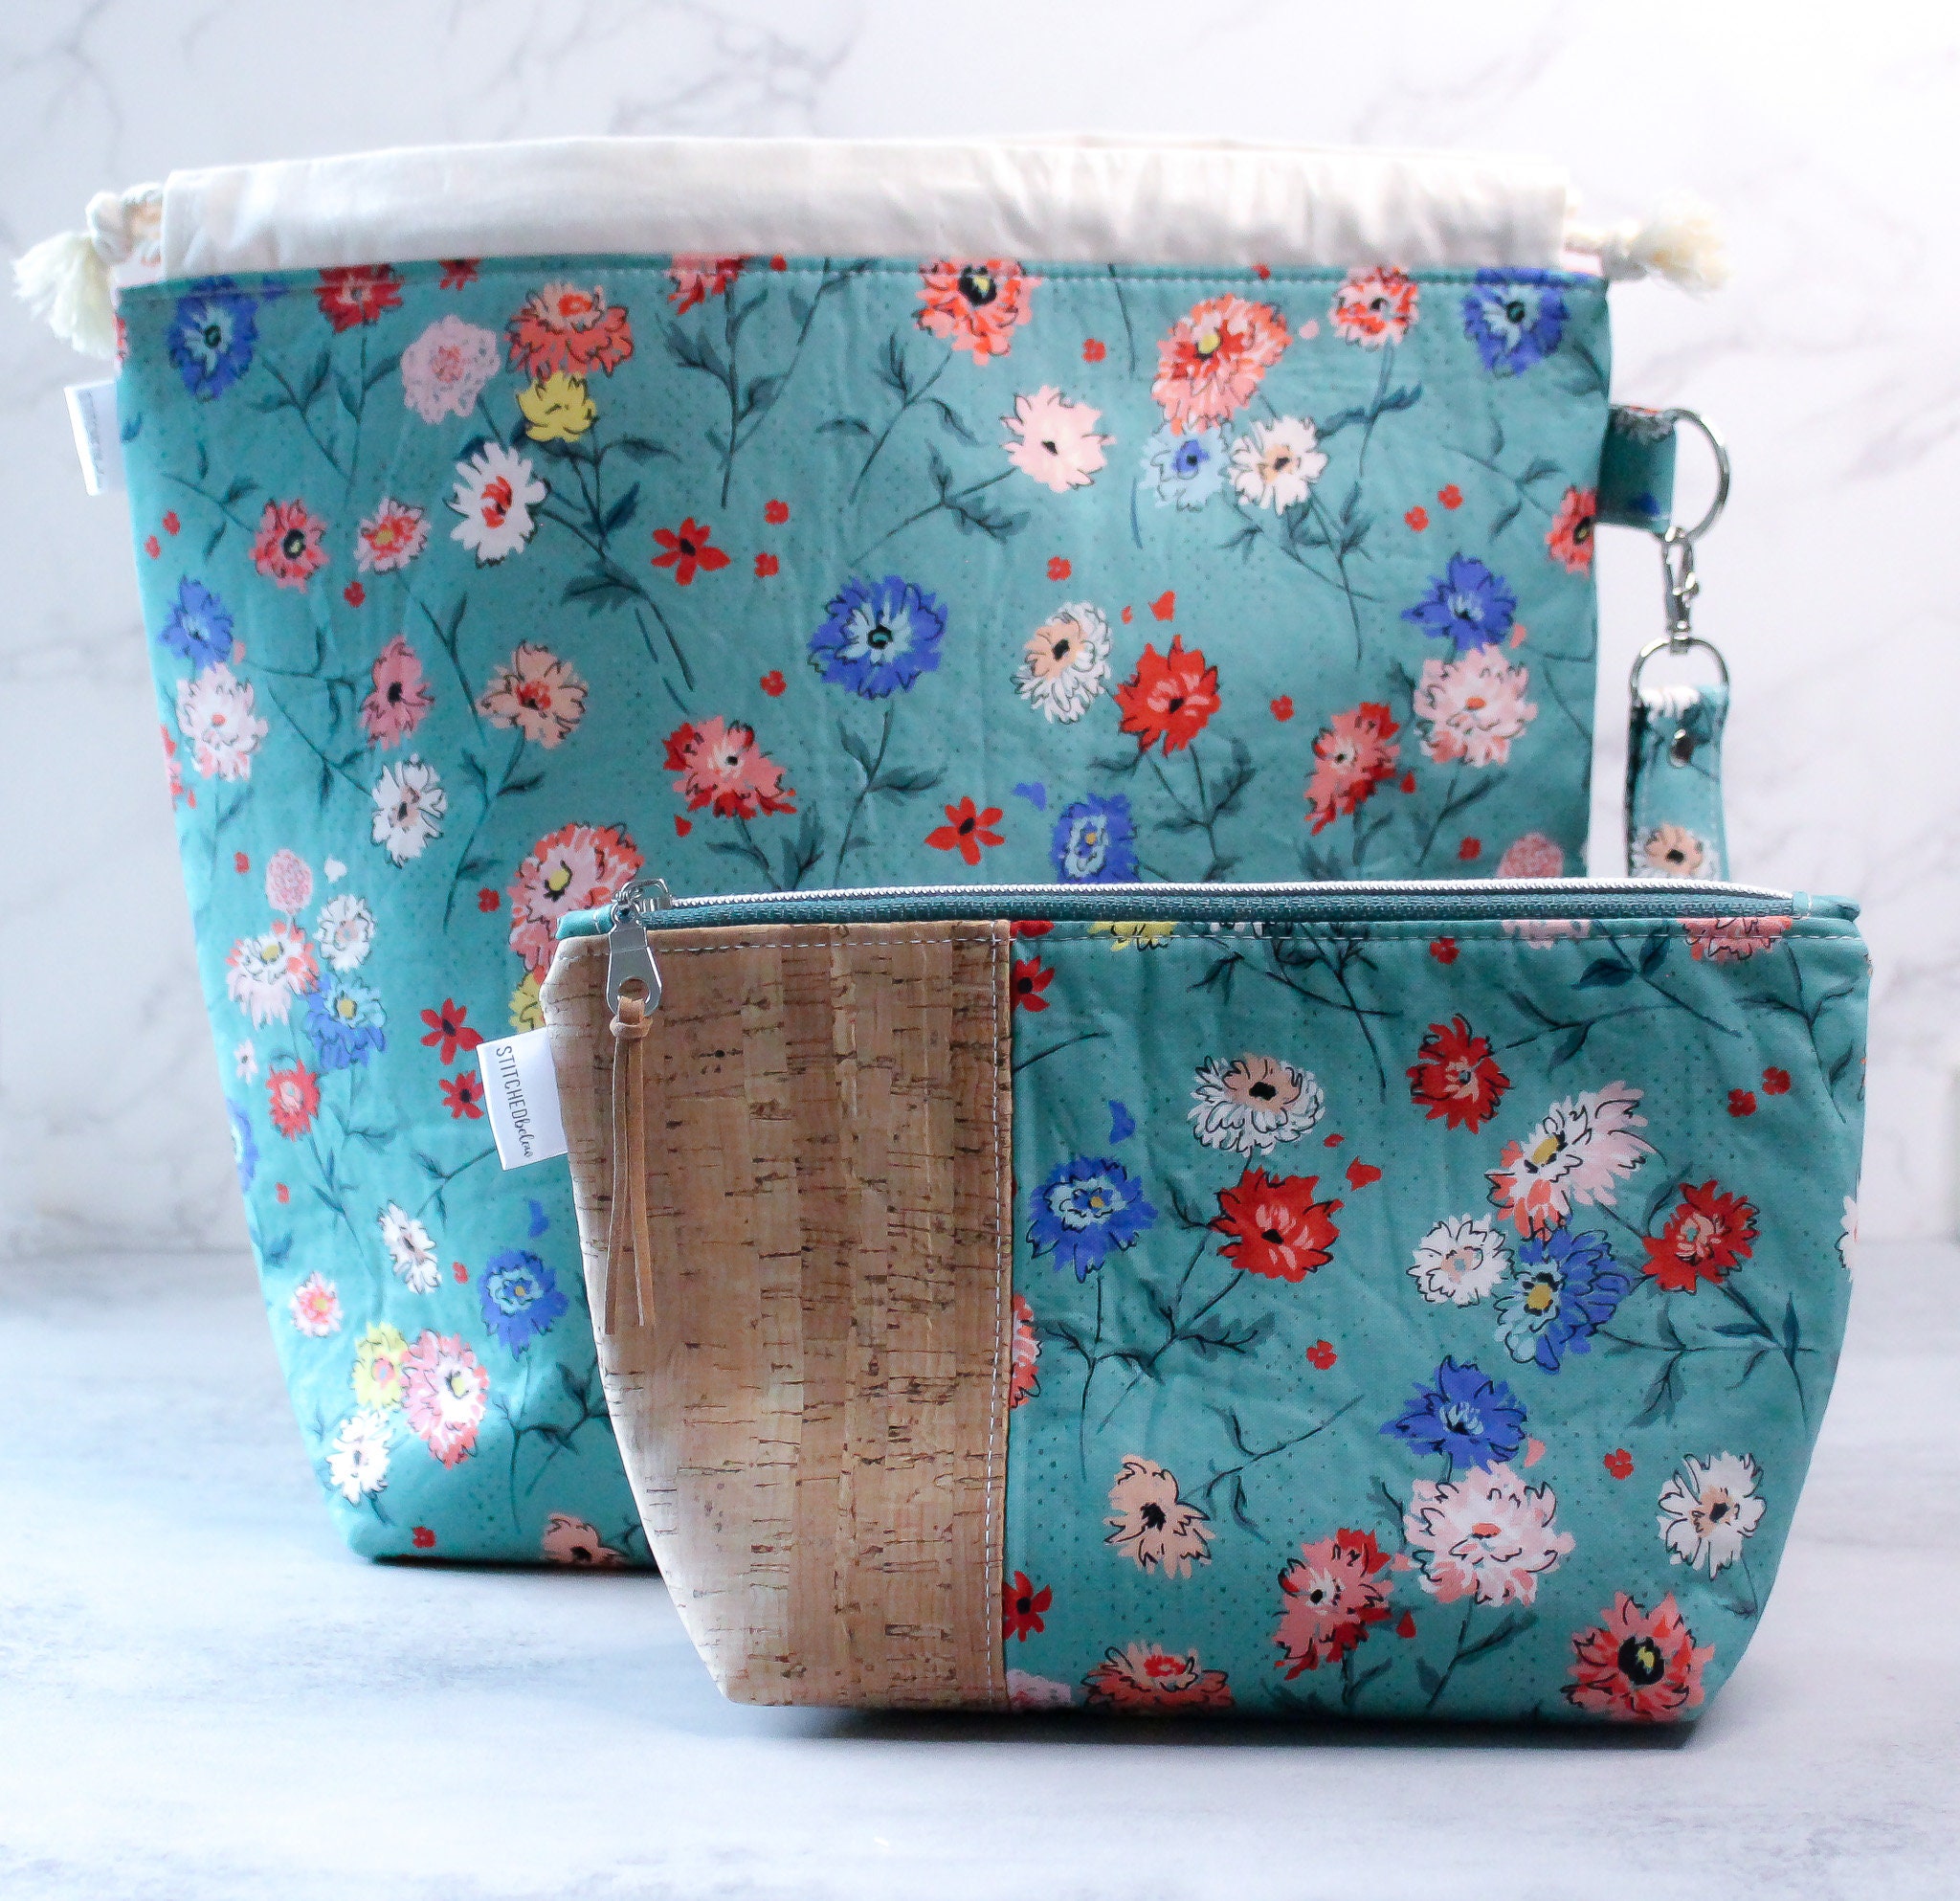 Zipper 12 Handmade Crochet Bag Handle Cover Protector Wrap Bag Charm  Accessory